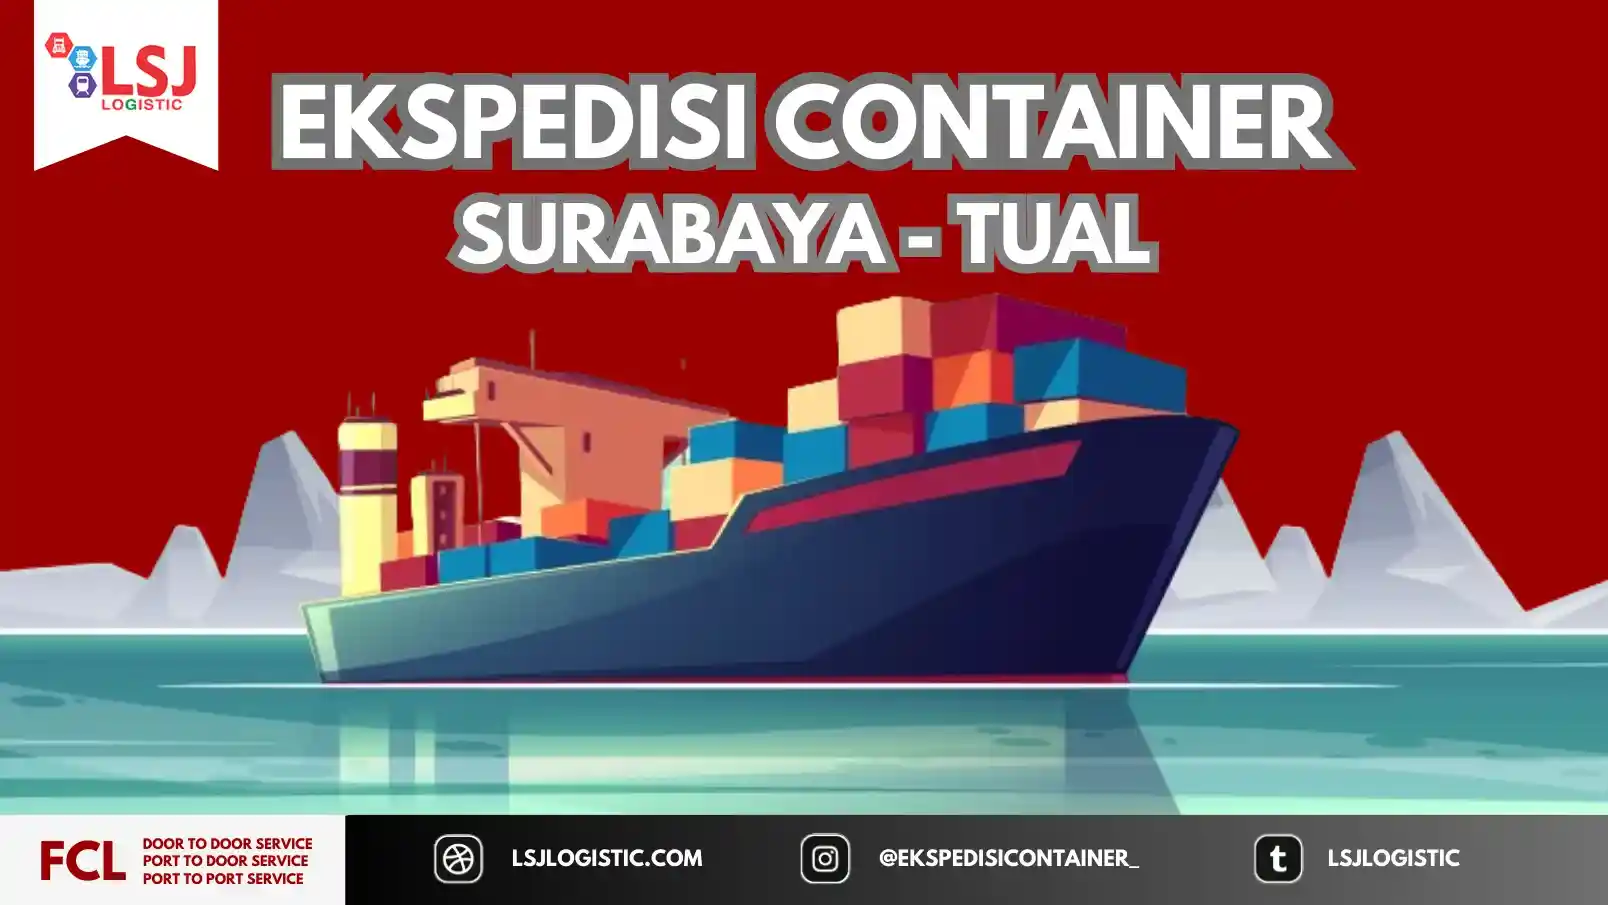 Tarif Pengiriman Container Surabaya Tual